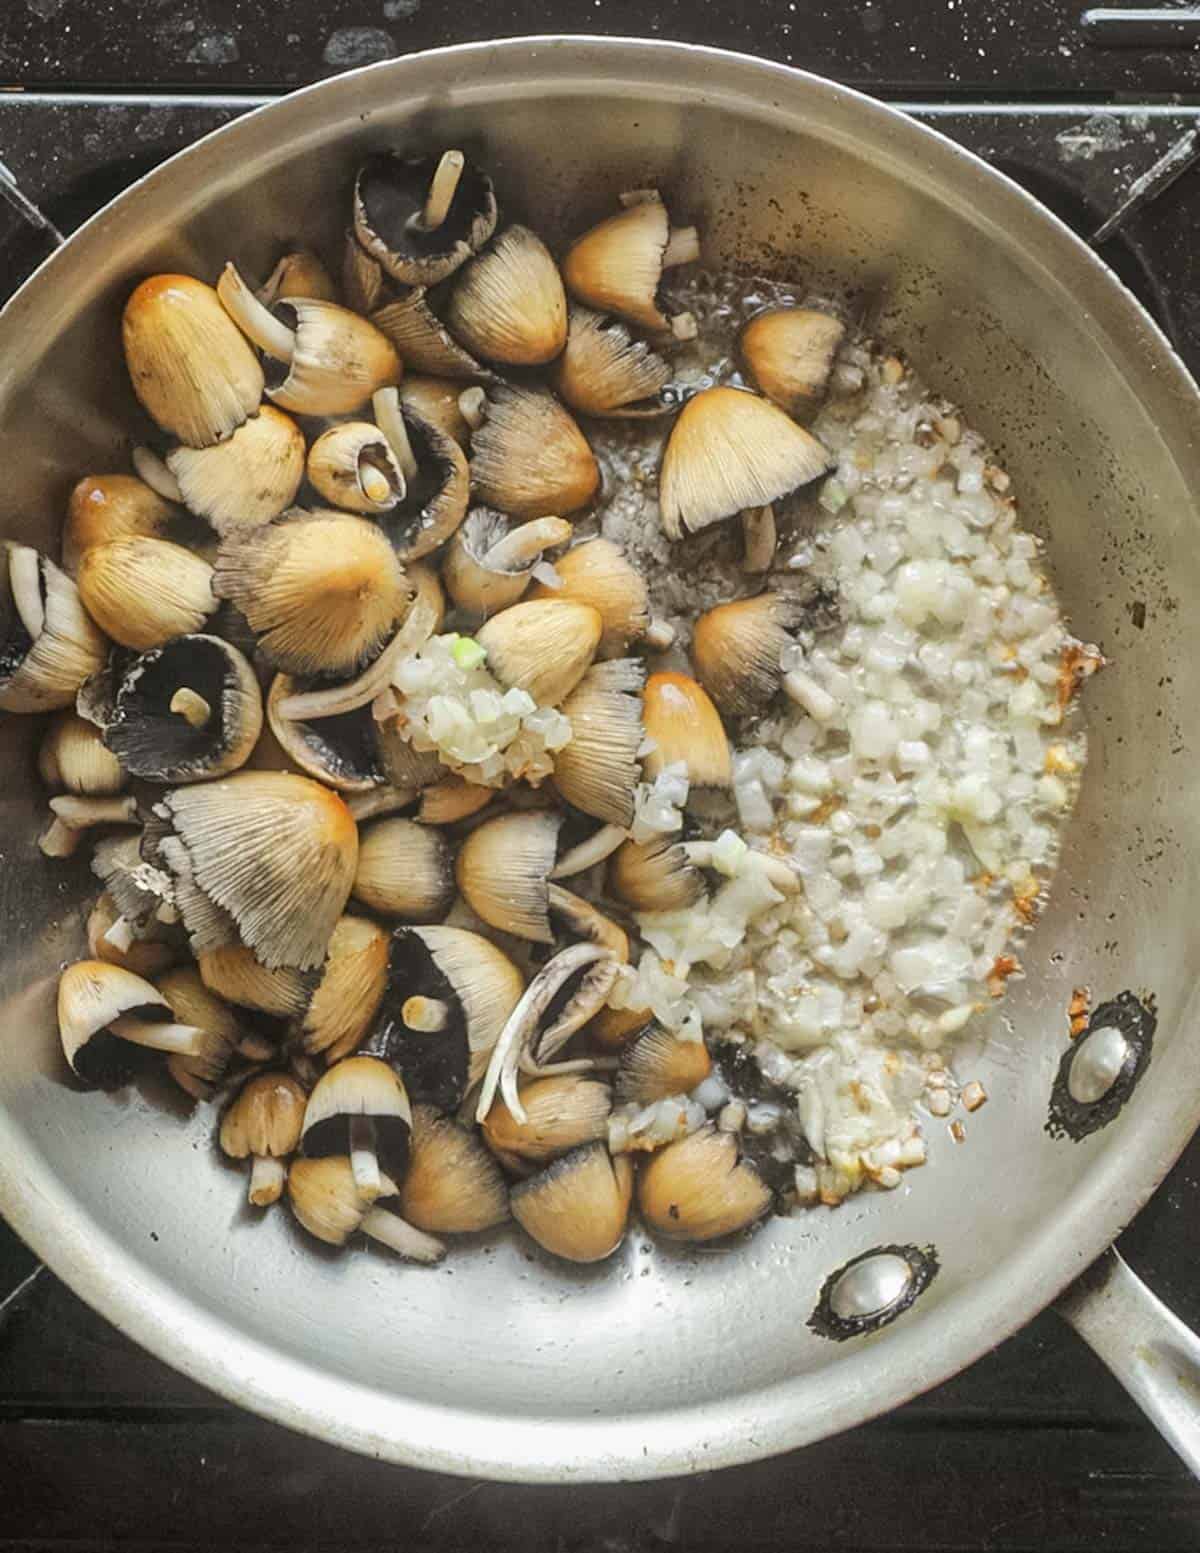 Adding mica cap mushrooms to a pan of shallots.